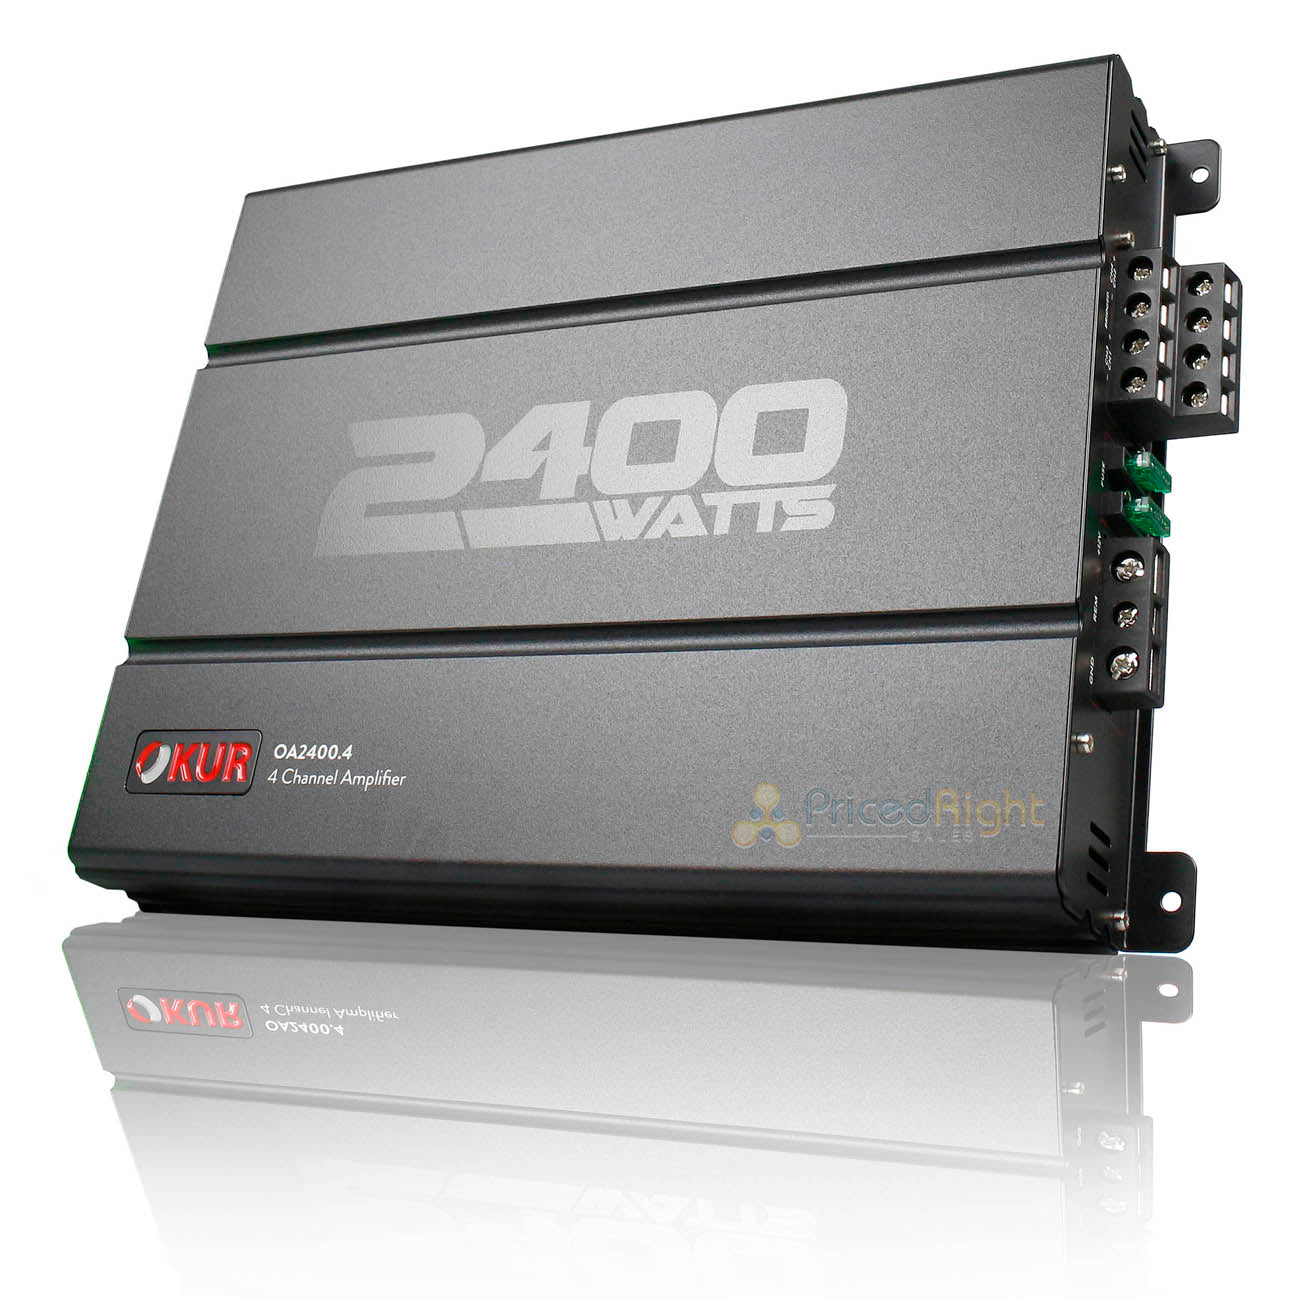 OKUR 4 Channel Amplifier 2400 Watts Max Power 2 Ohms Car Audio Class AB OA2400.4